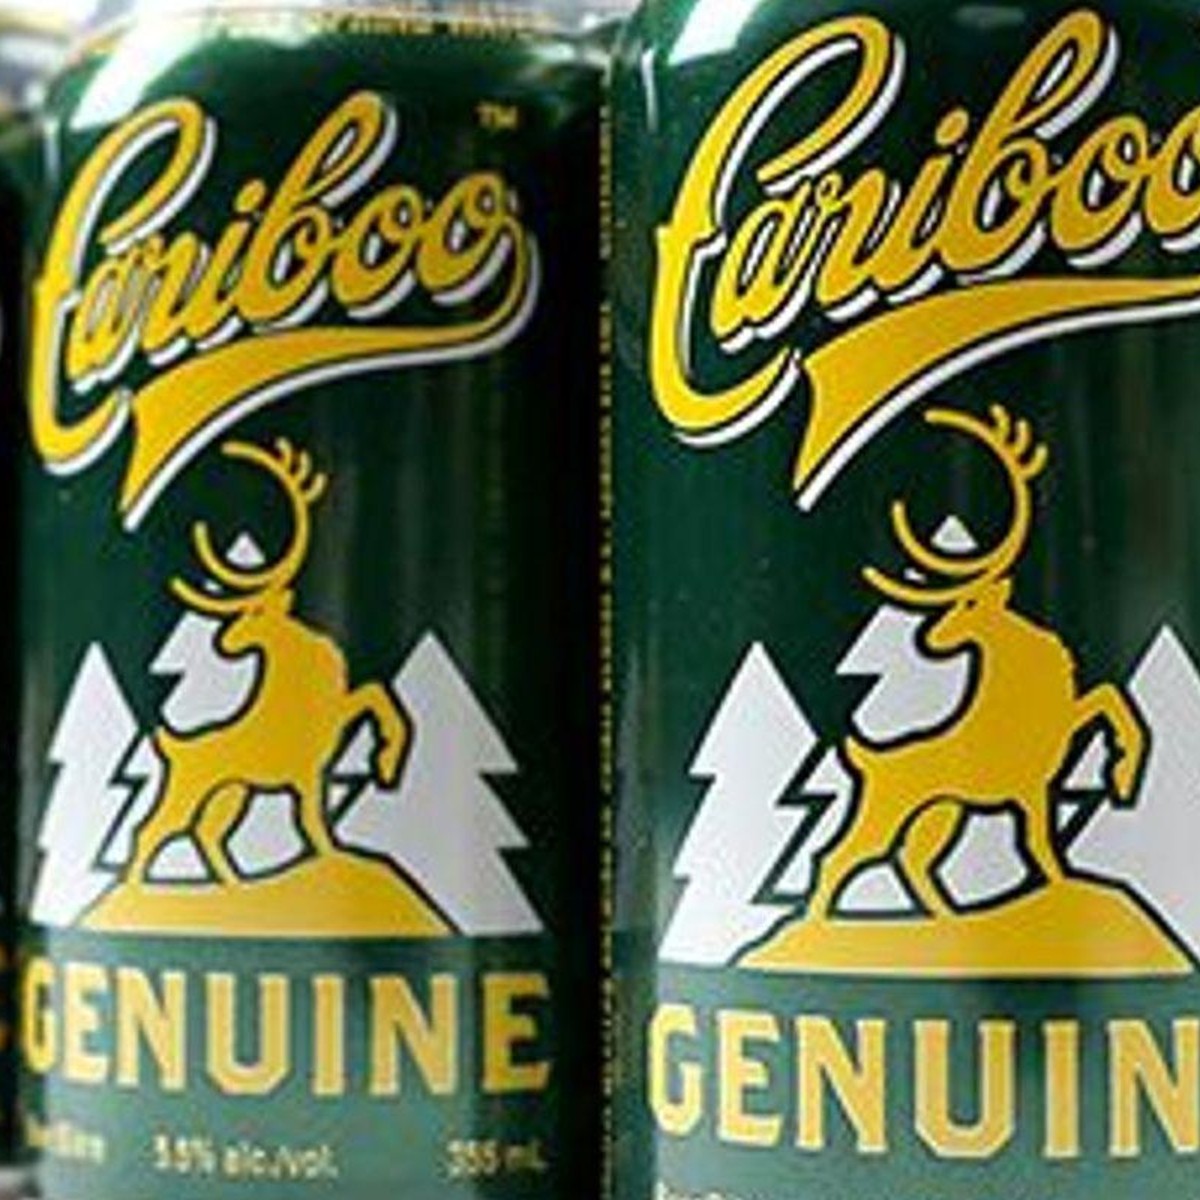 Smirnoff Ice Light Original 4 Cans > Coolers > Parkside Liquor Beer & Wine